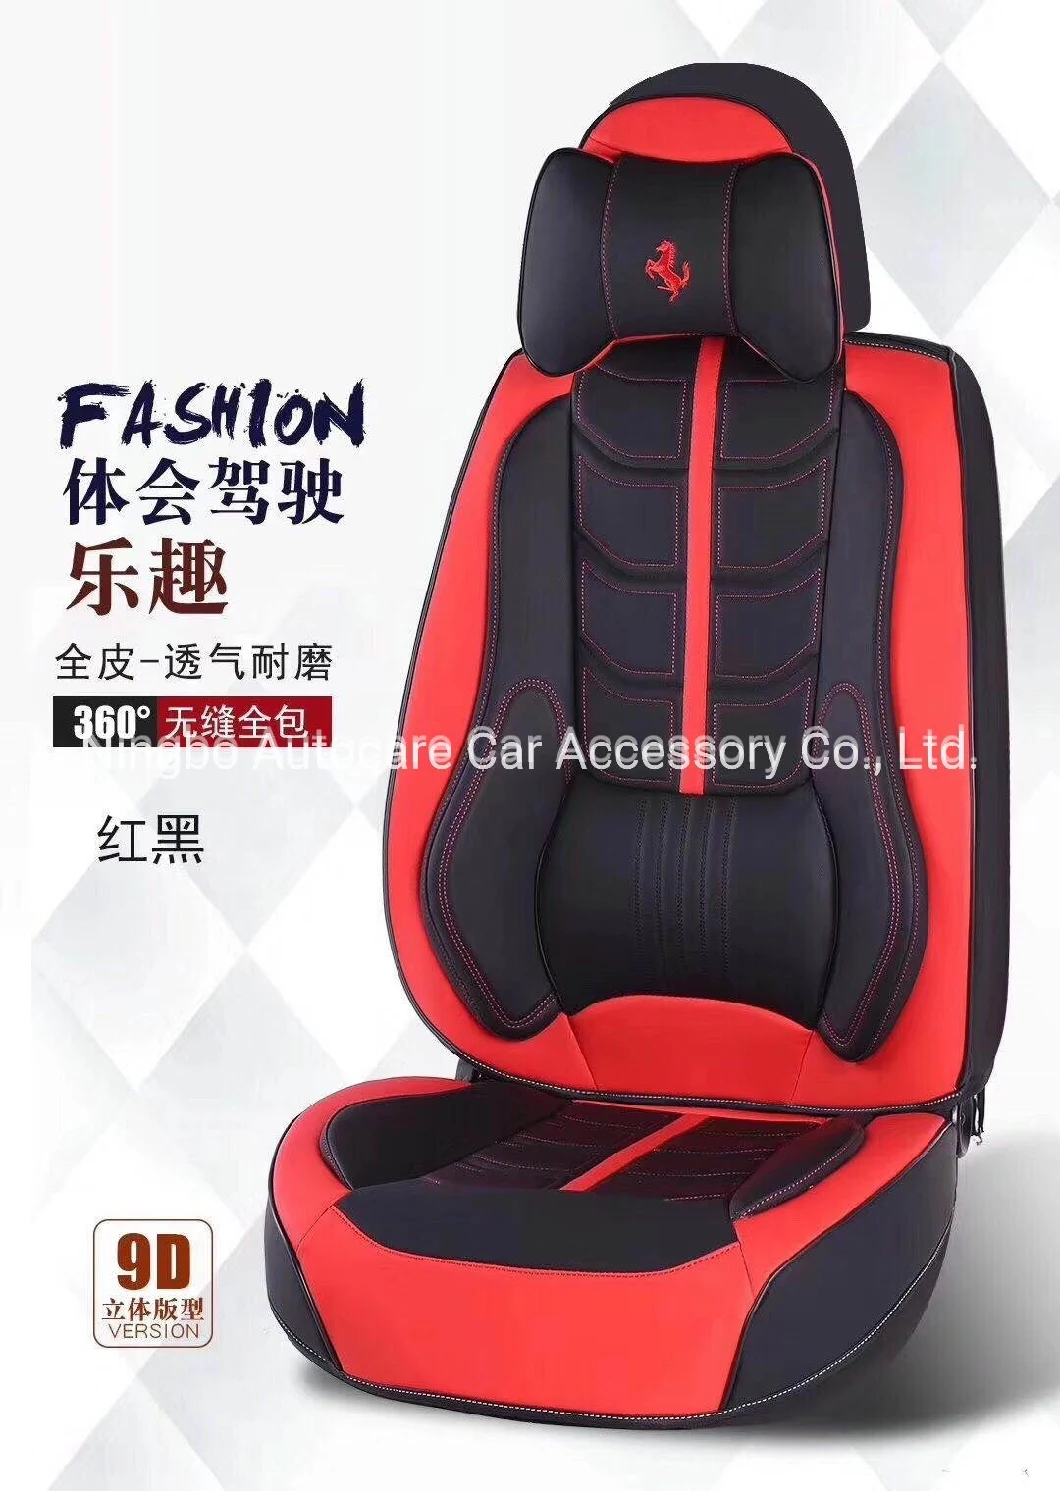 Car Accessories Car Decoration Car Seat Cushion Universal Leather Auto Car Seat Cover